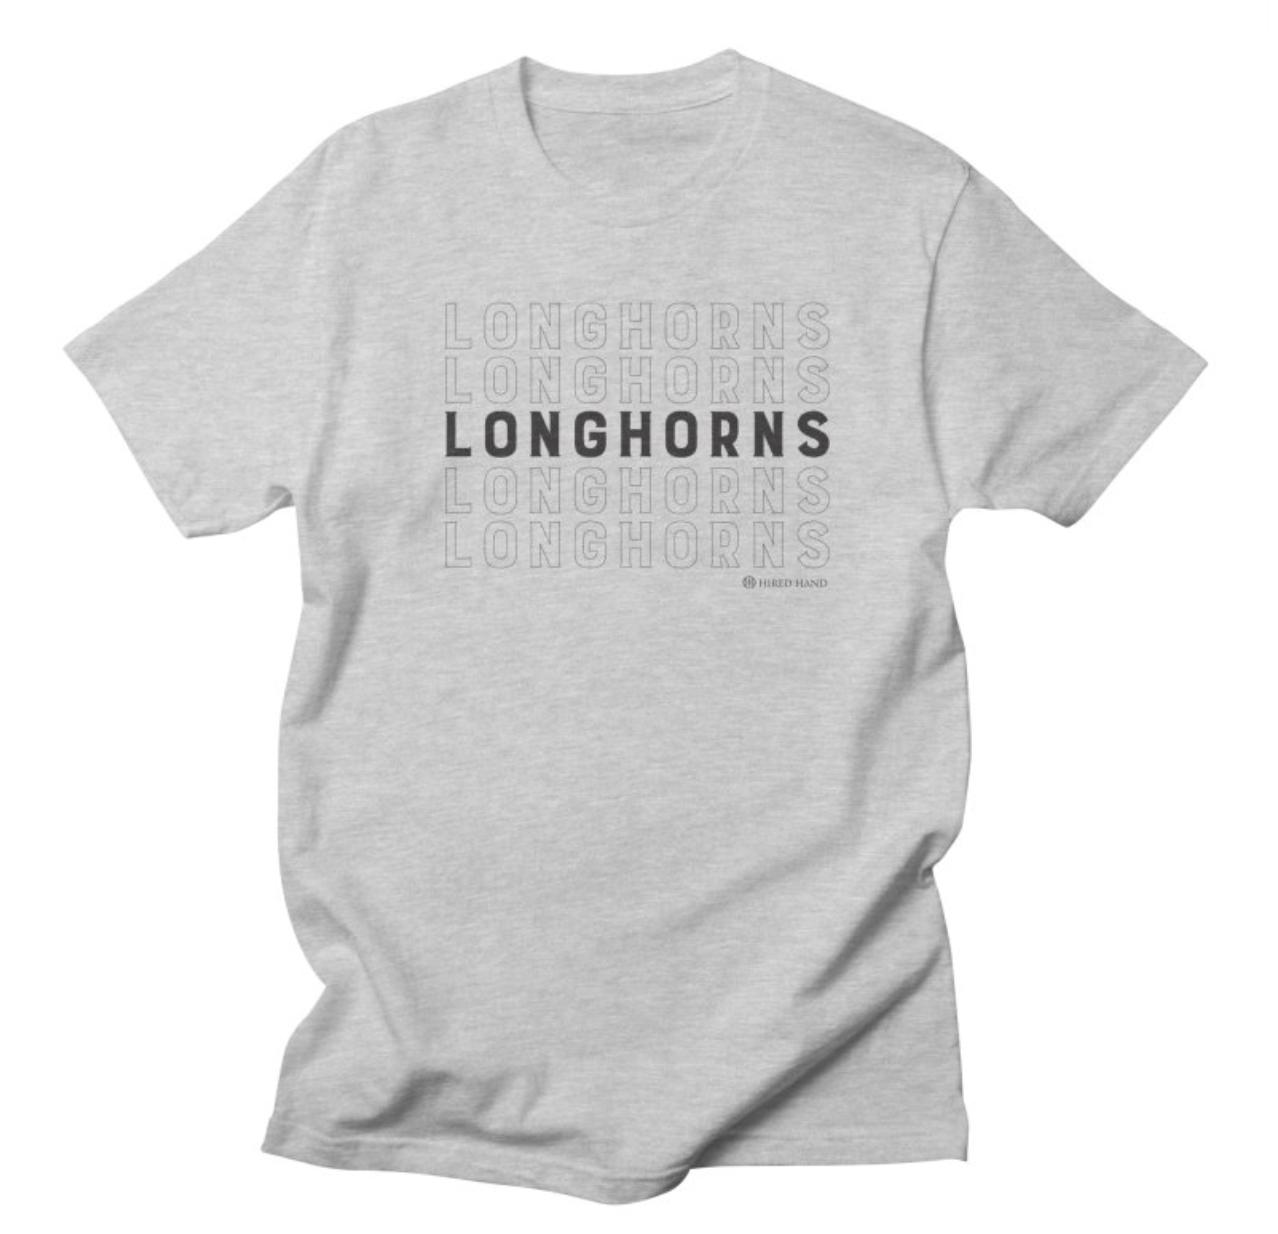 Longhorns t-shirt